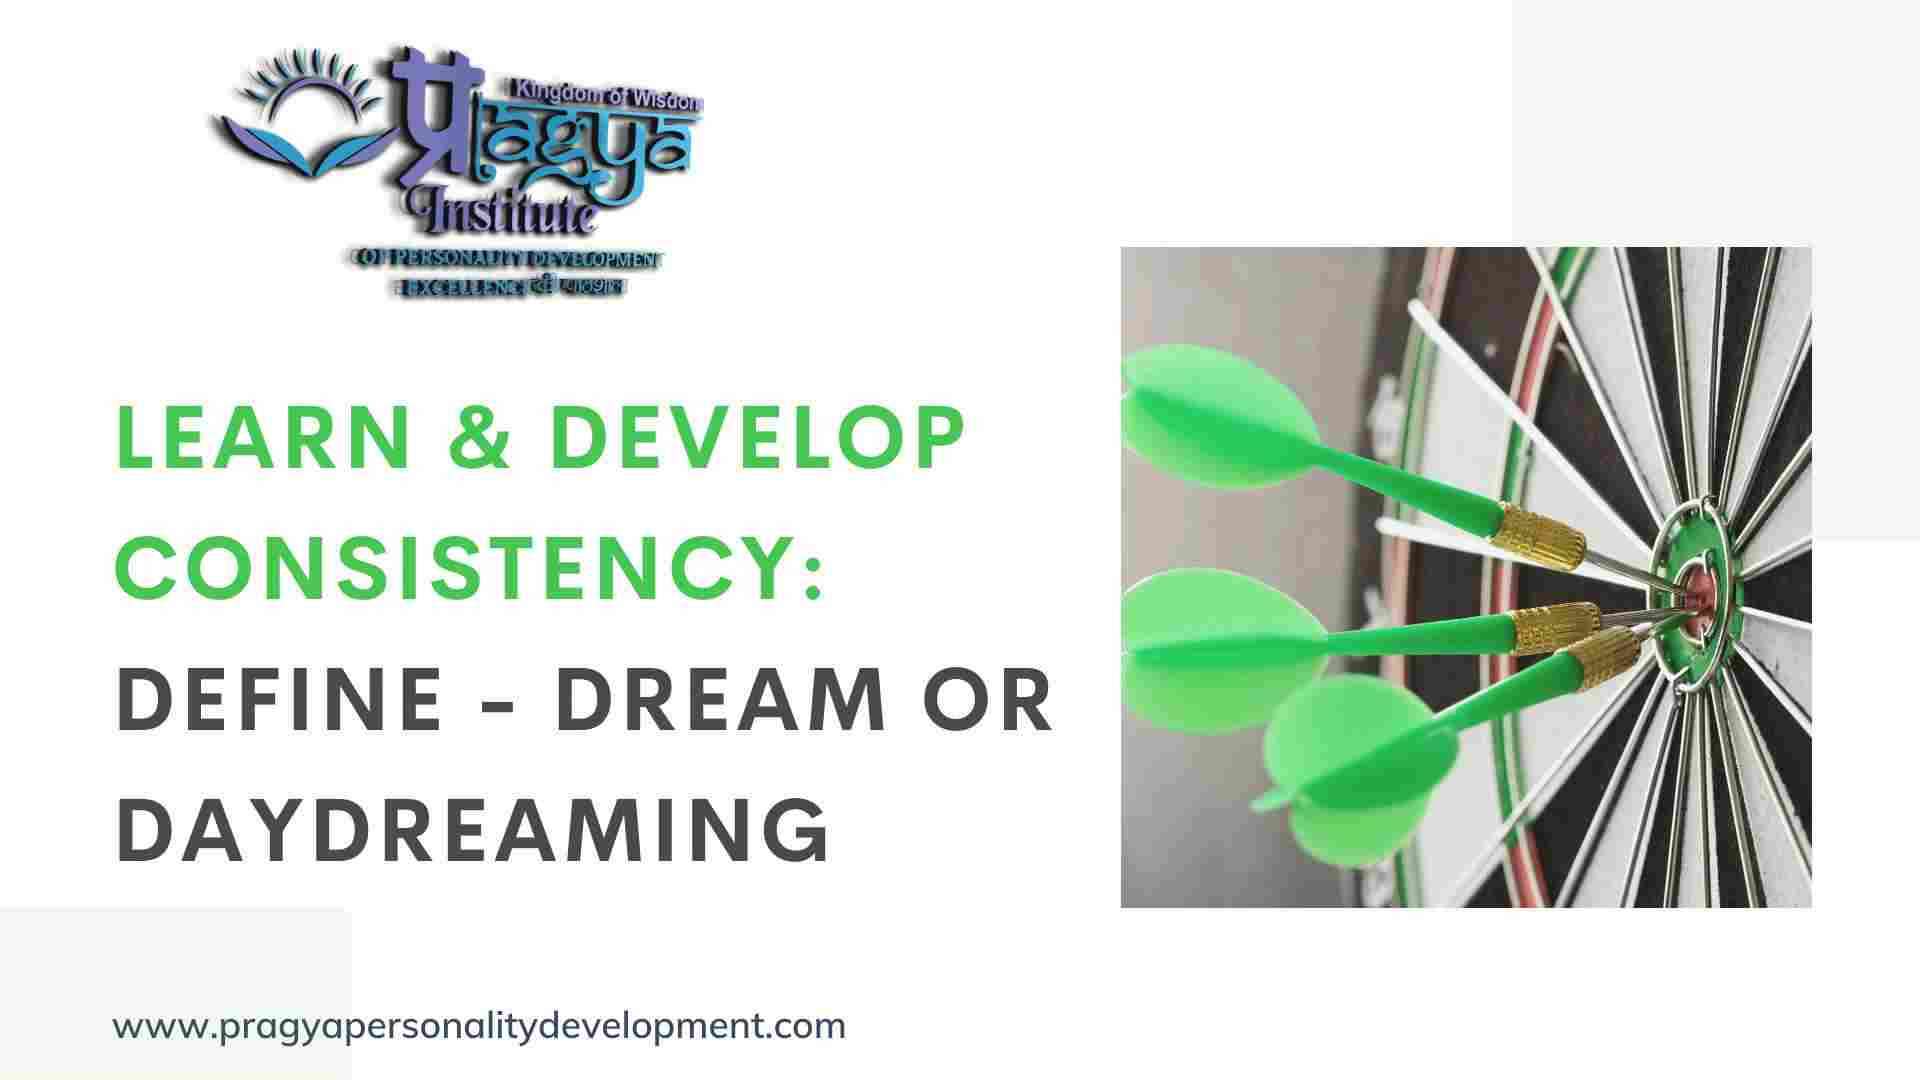 Learn & Develop Consistency: Define - Dream or Daydreaming